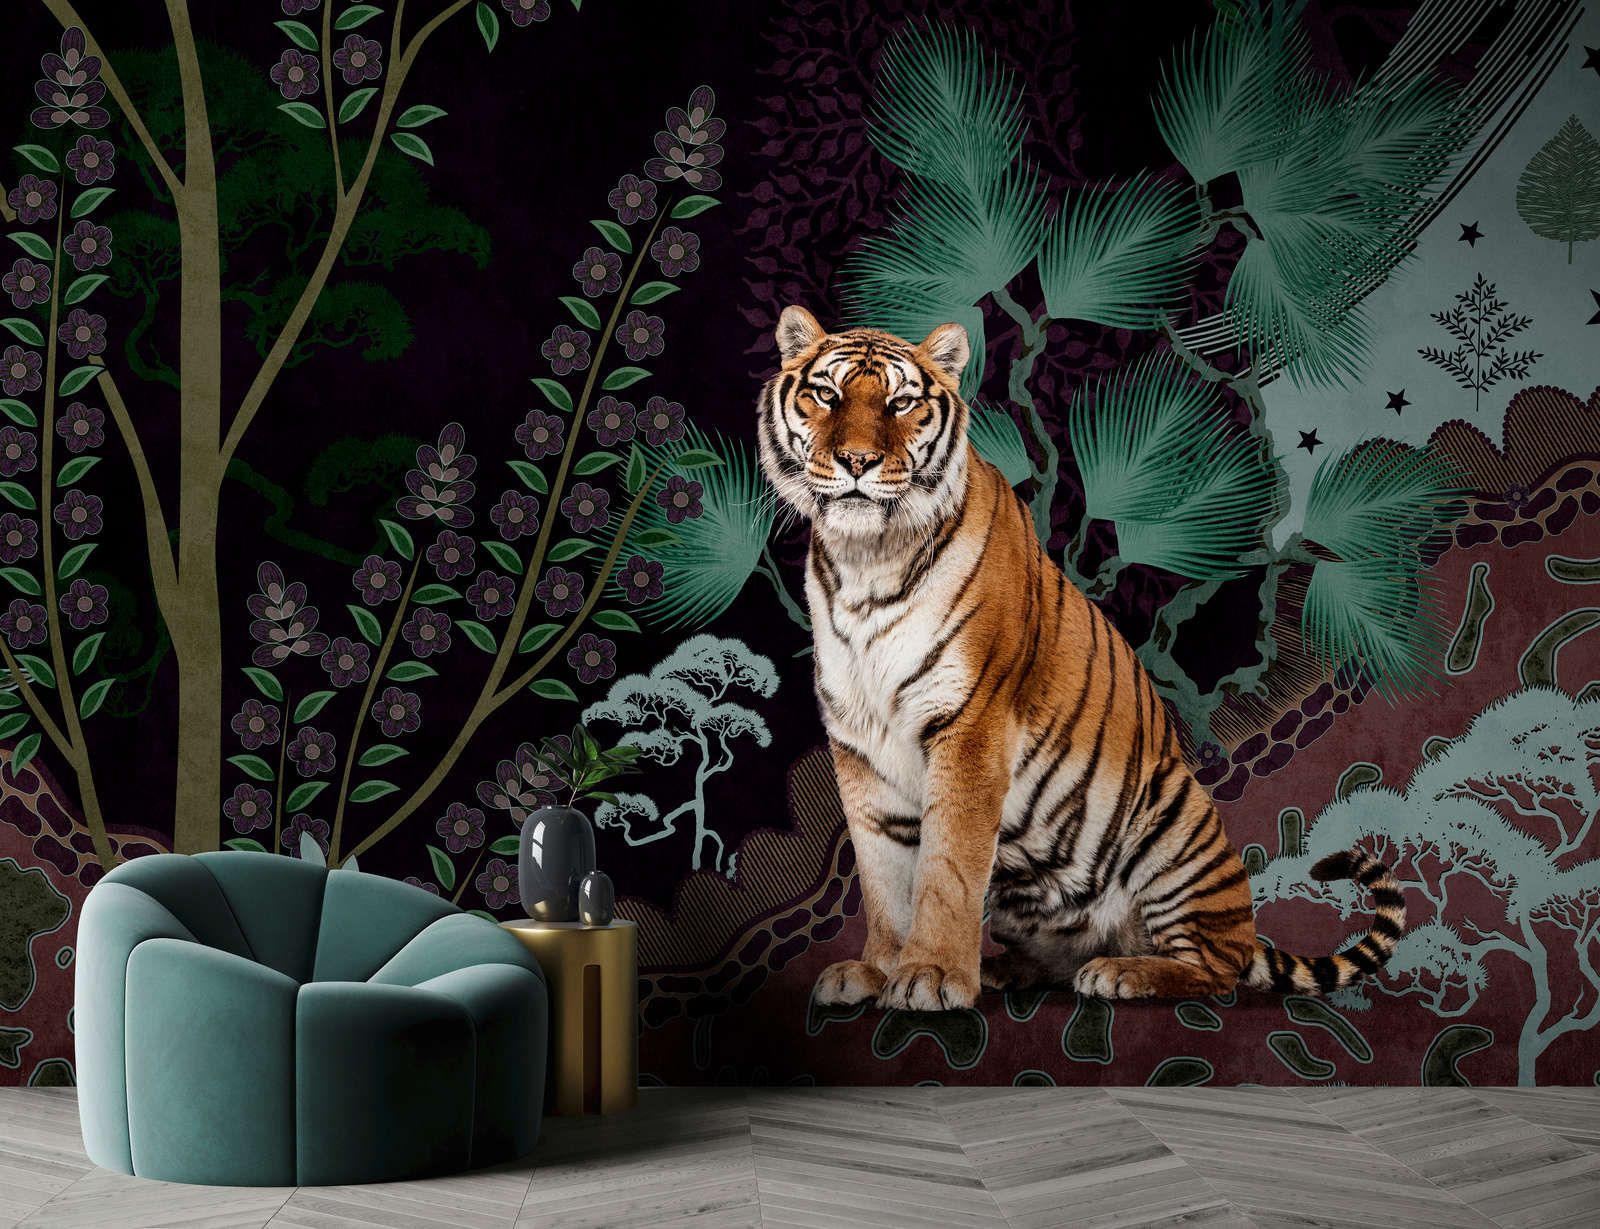             Digital behang »khan« - Abstract jungle-motief met tijger - Gladde, licht glanzende premium vliesstof
        